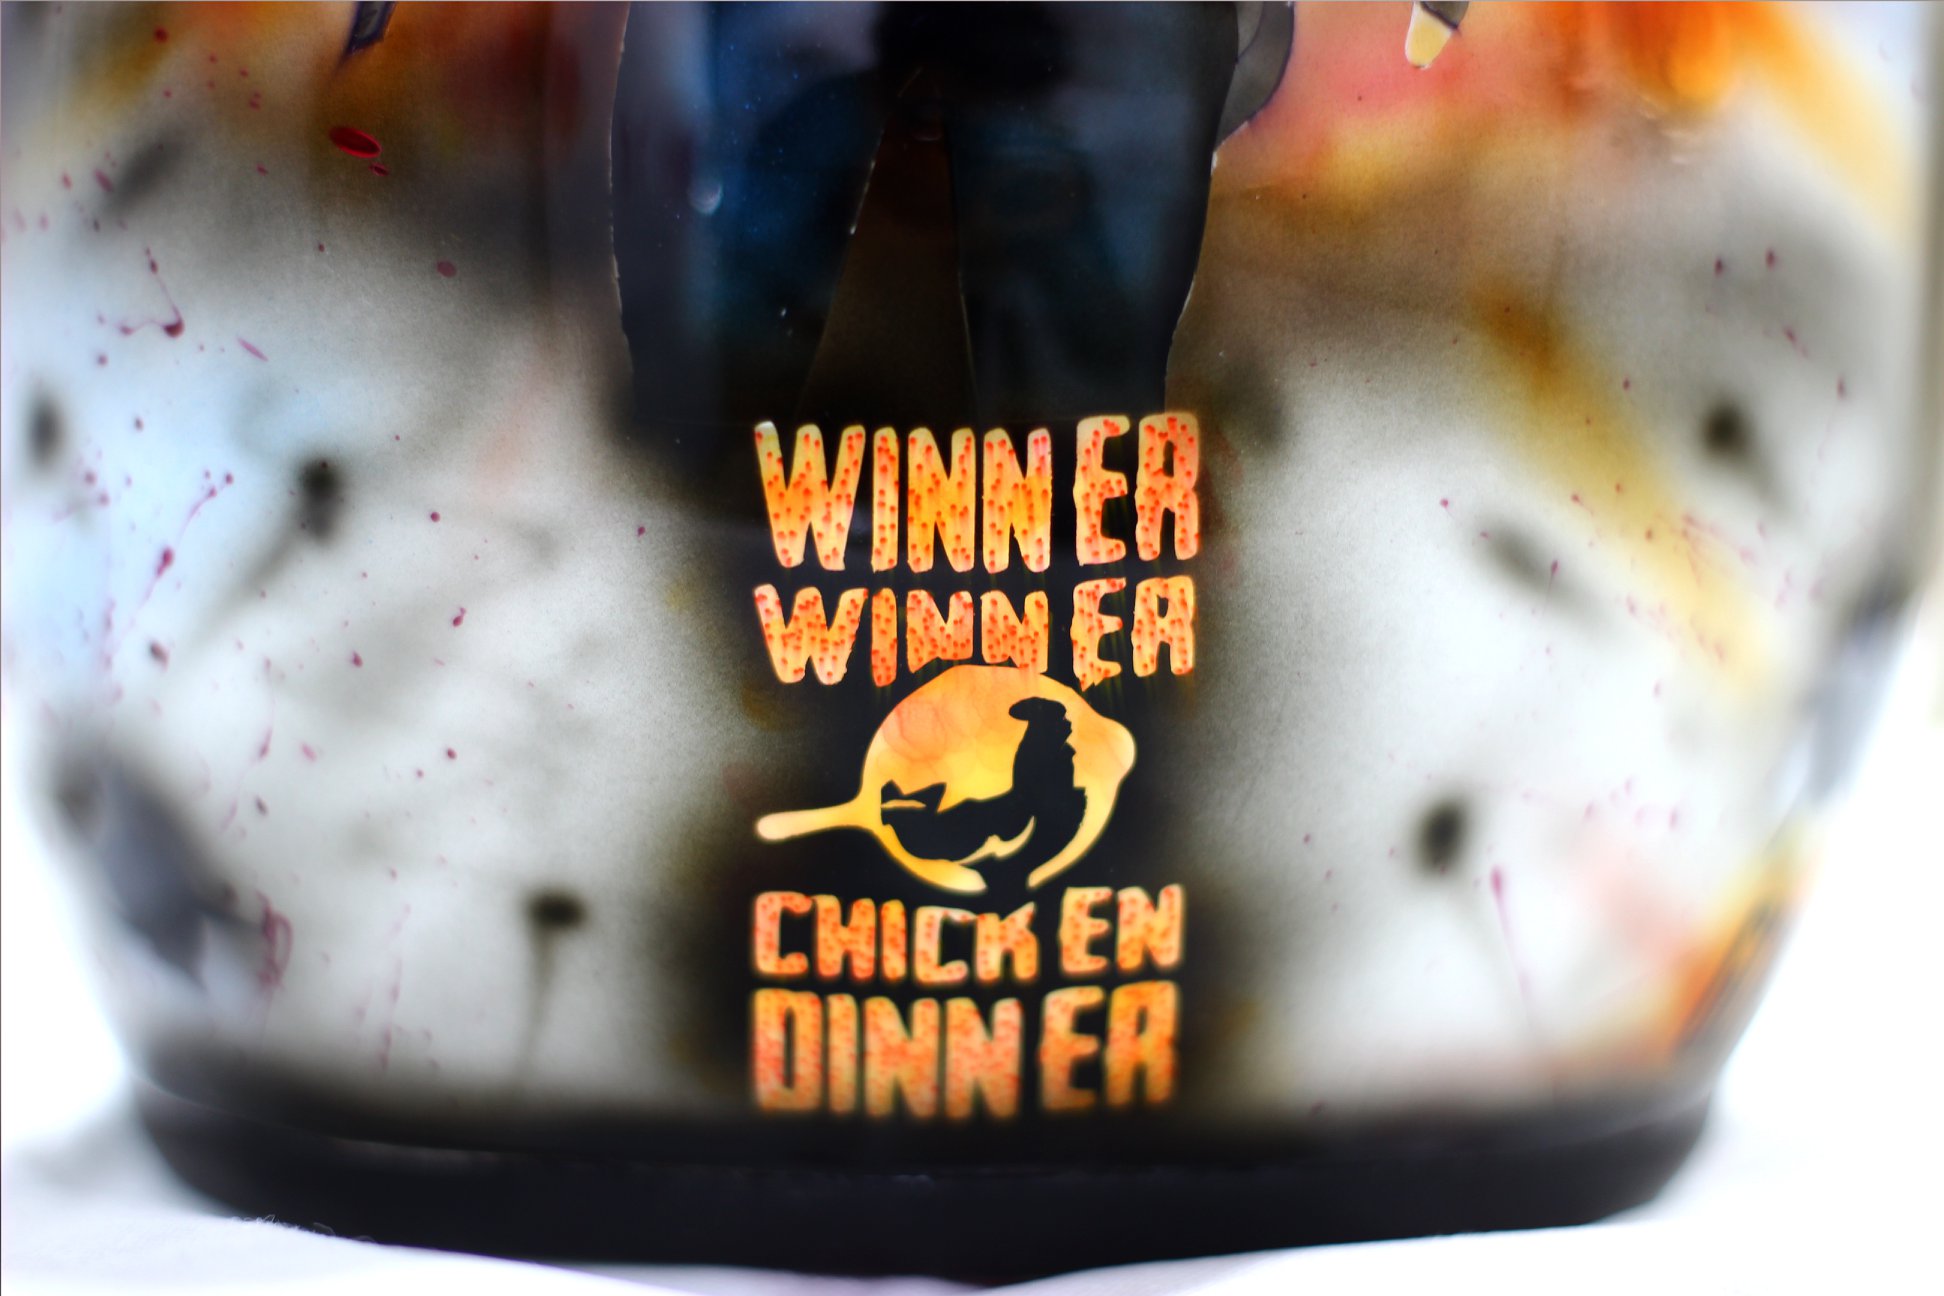 'Winner Winner Chicken Dinner' Hand-Painted PUBG Helmet by 'Guns and Hoses' - photo